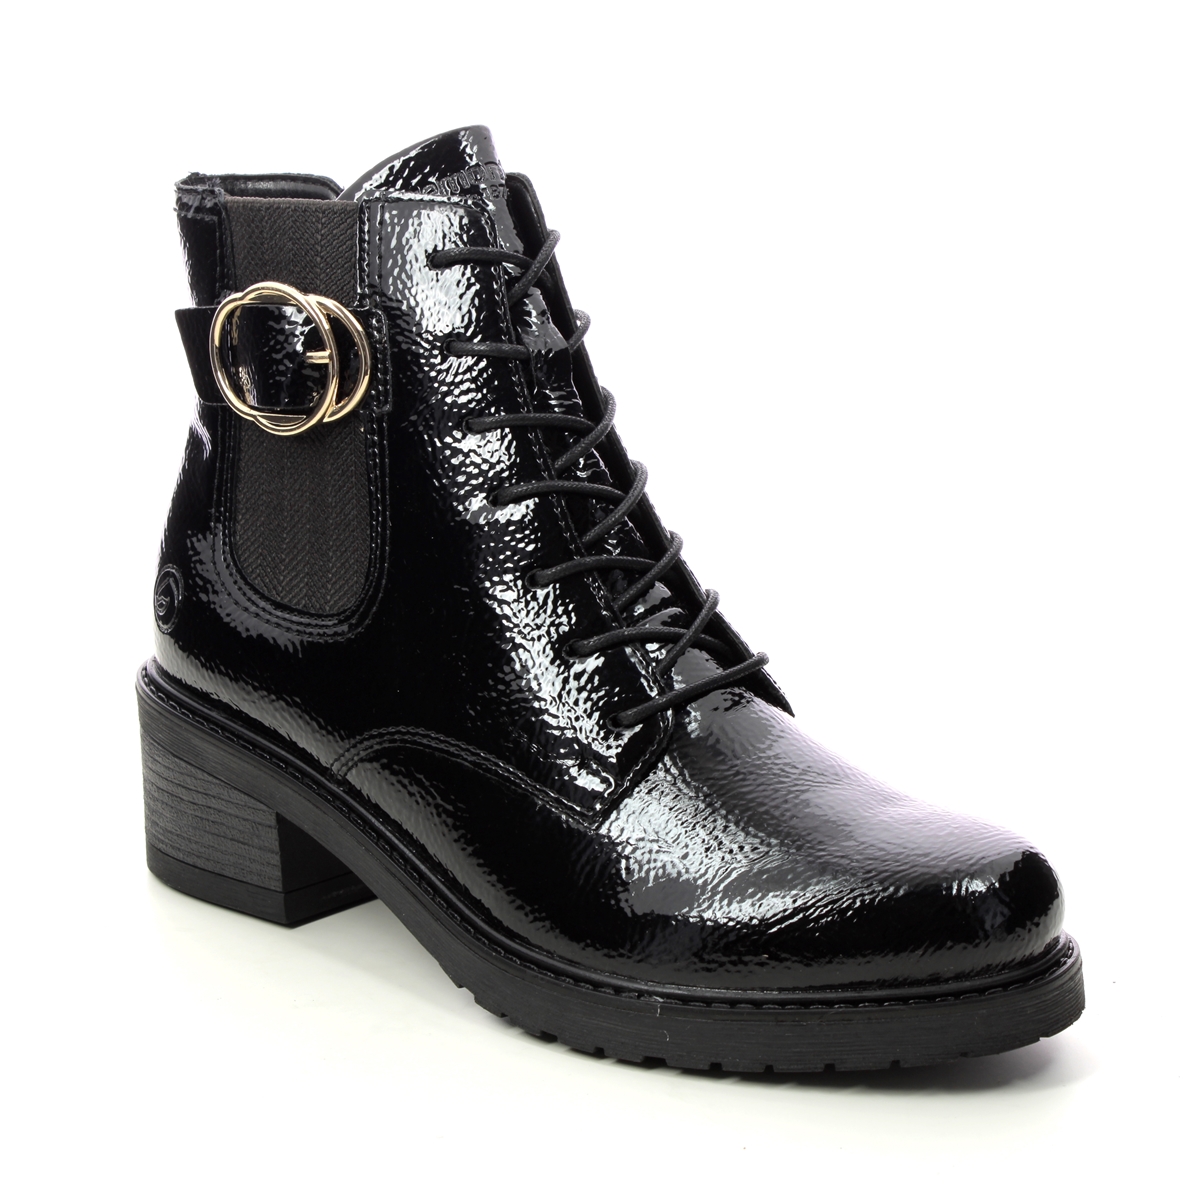 Remonte Menarem Buck Black Patent Womens Lace Up Boots D1A72-01 In Size 39 In Plain Black Patent